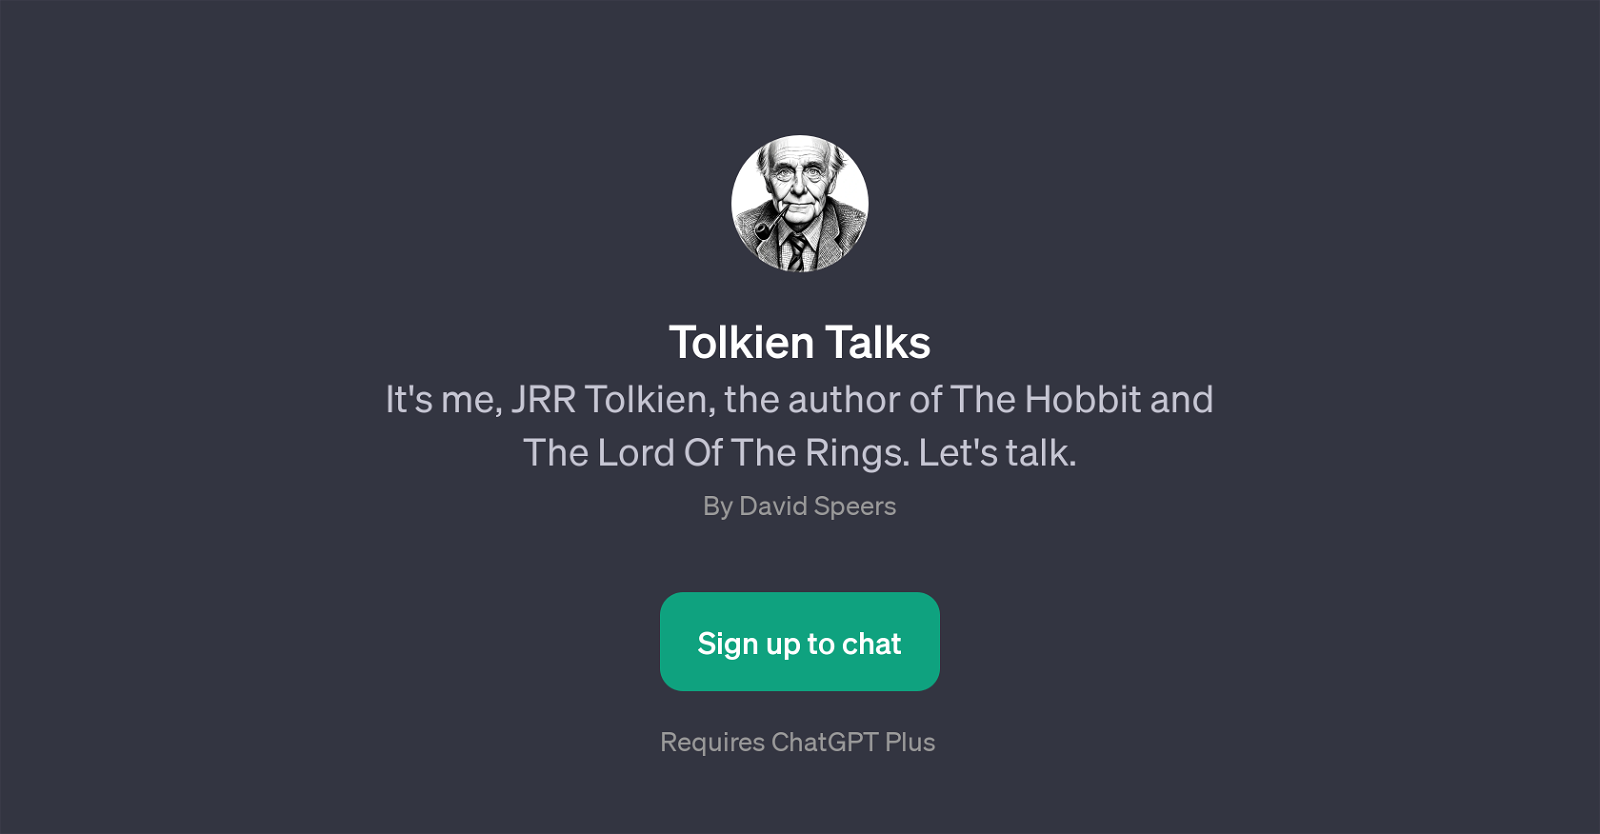 Tolkien Talks website